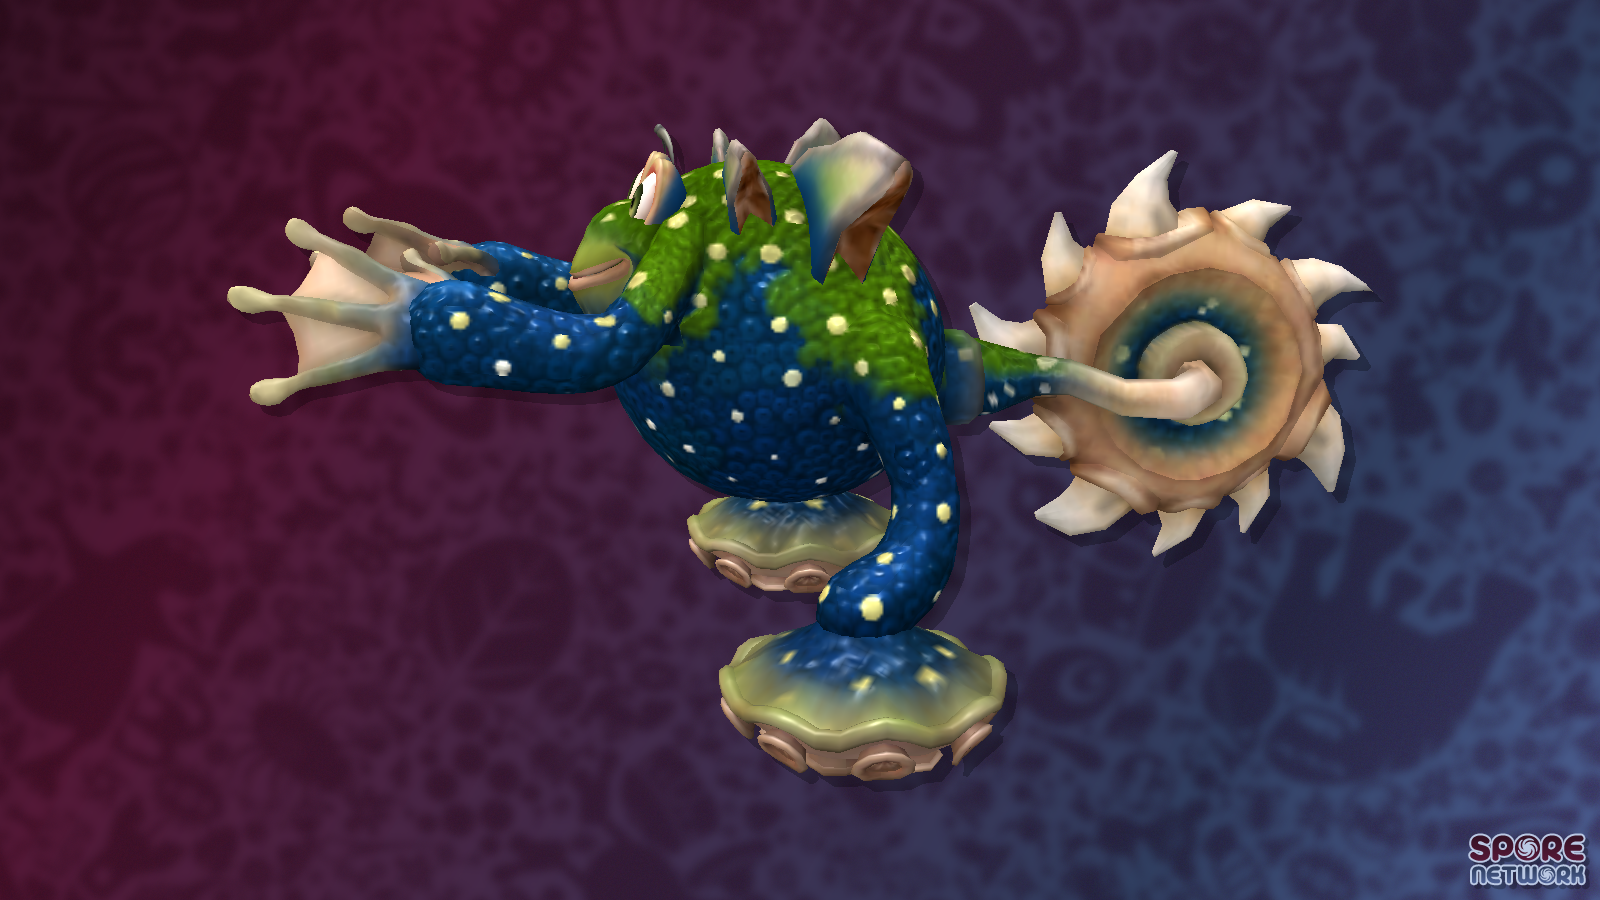 The Froggurrr Spore Creature by Rosana at SporeNetwork